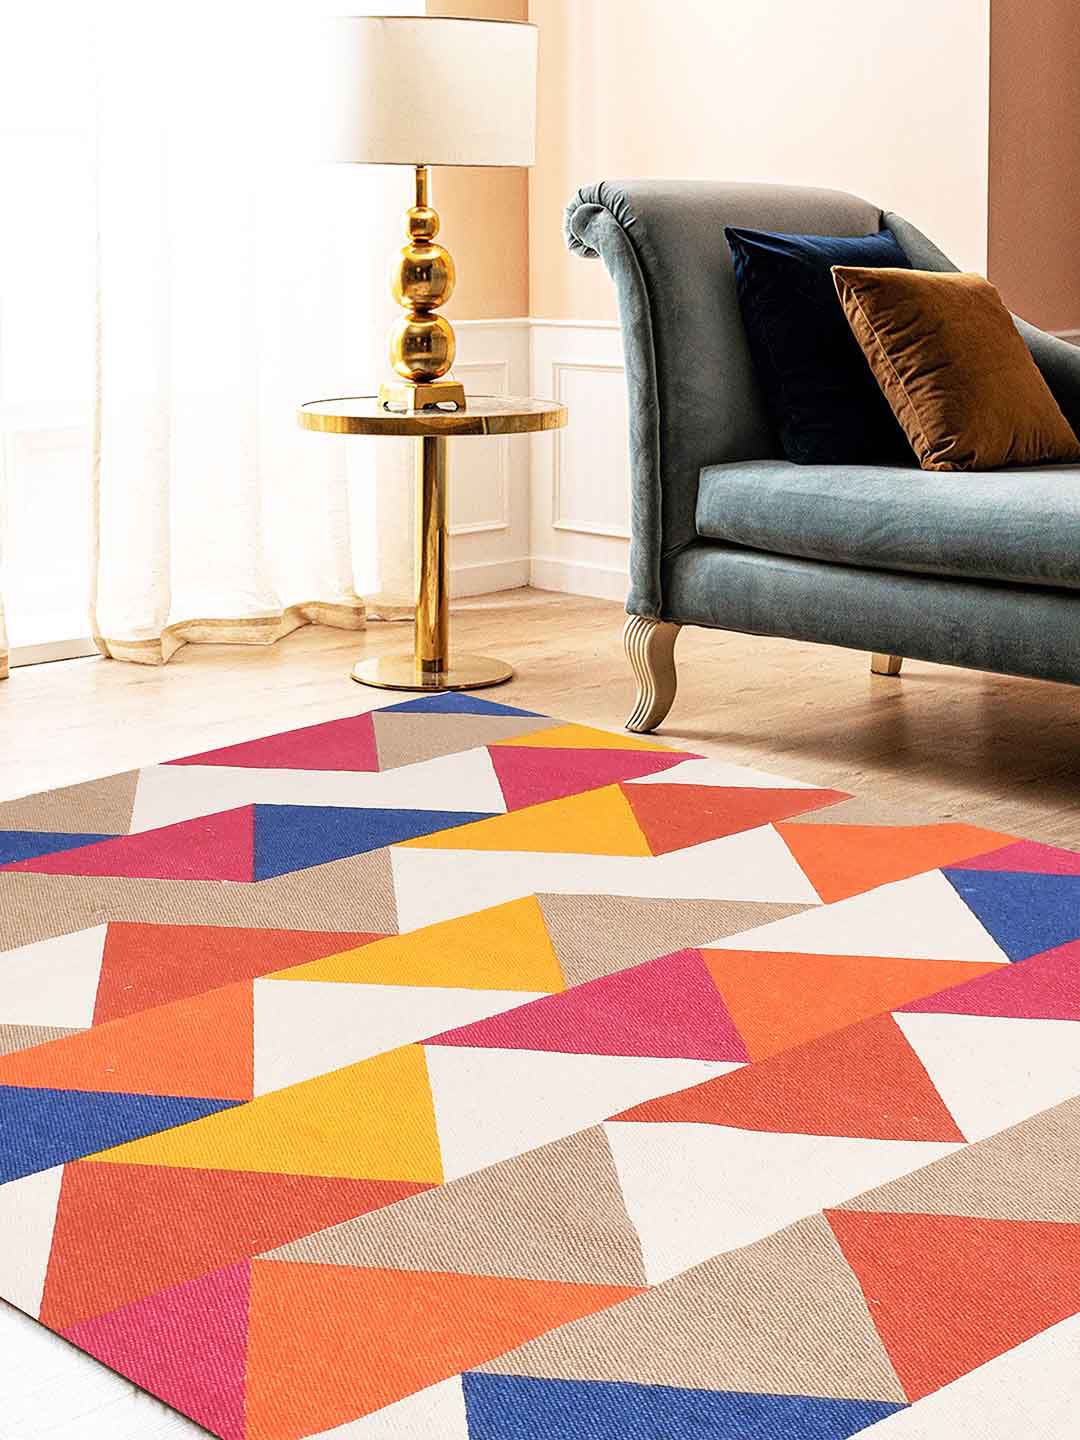 BLANC9 White & Orange Geometric Printed Cotton Carpet Price in India